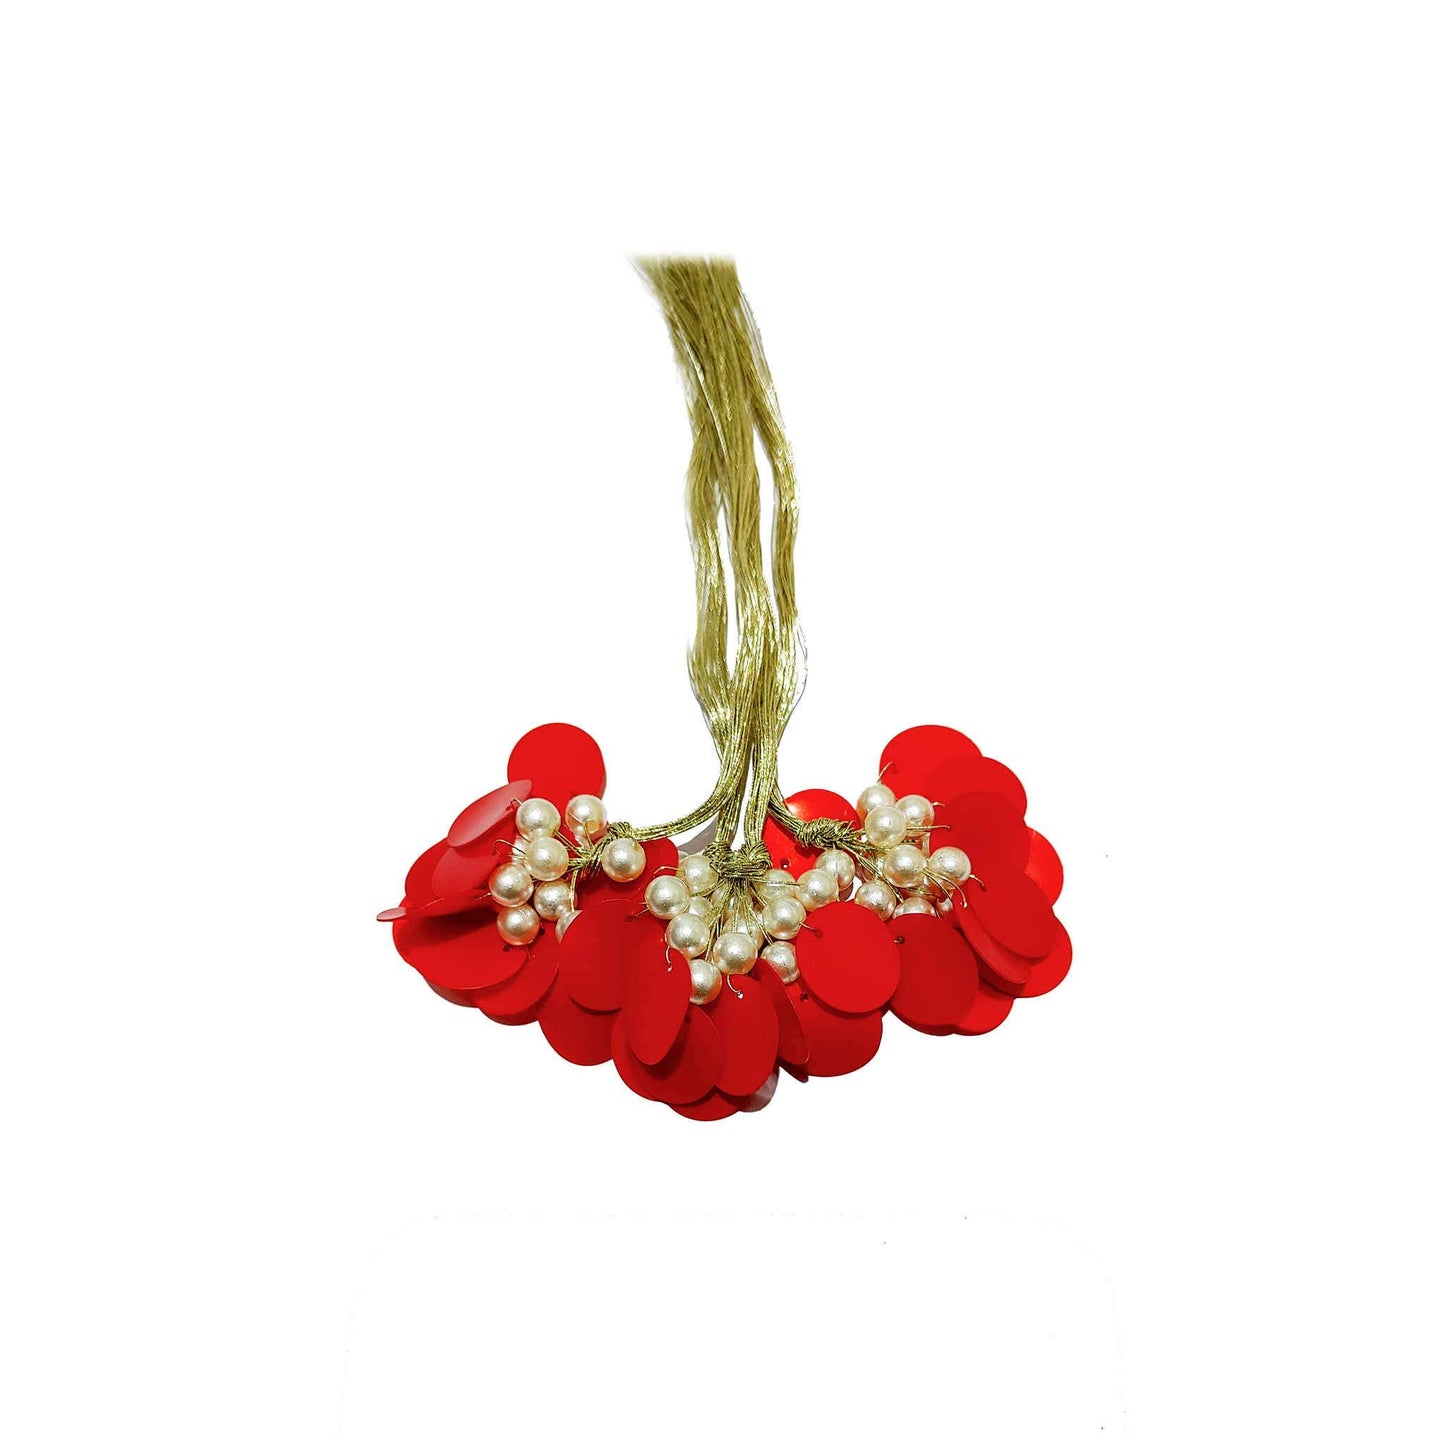 Indian Petals Handmade Sitara Thread Fringe Tassel for Craft, Jewelry or Dressing - Design 856, Red